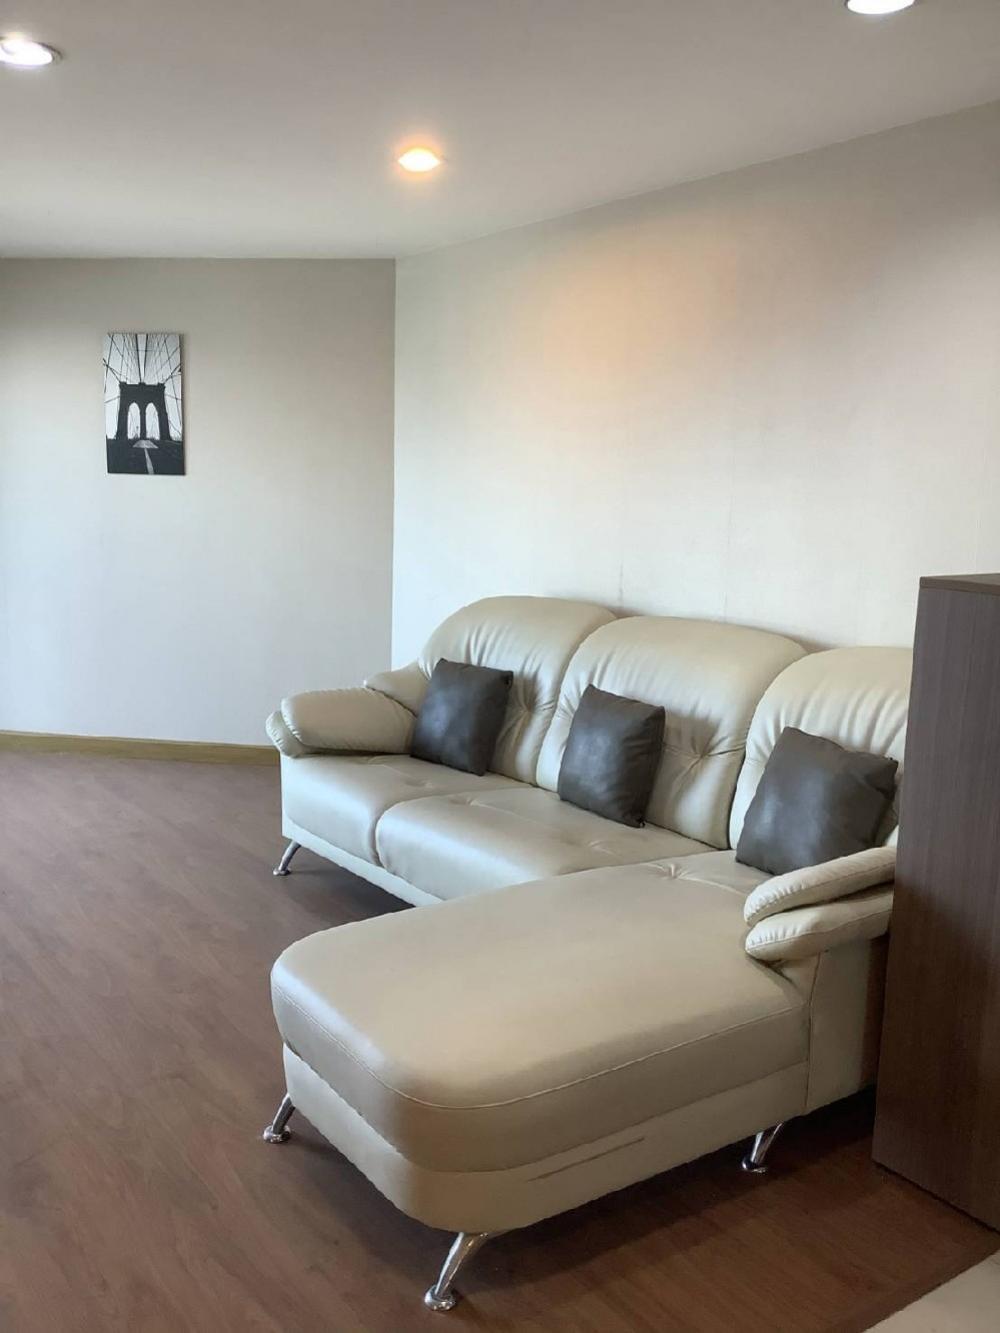 For RentCondoRama9, Petchburi, RCA : 2 bedrooms available for rent, Belle Grand Rama 9 Condo.